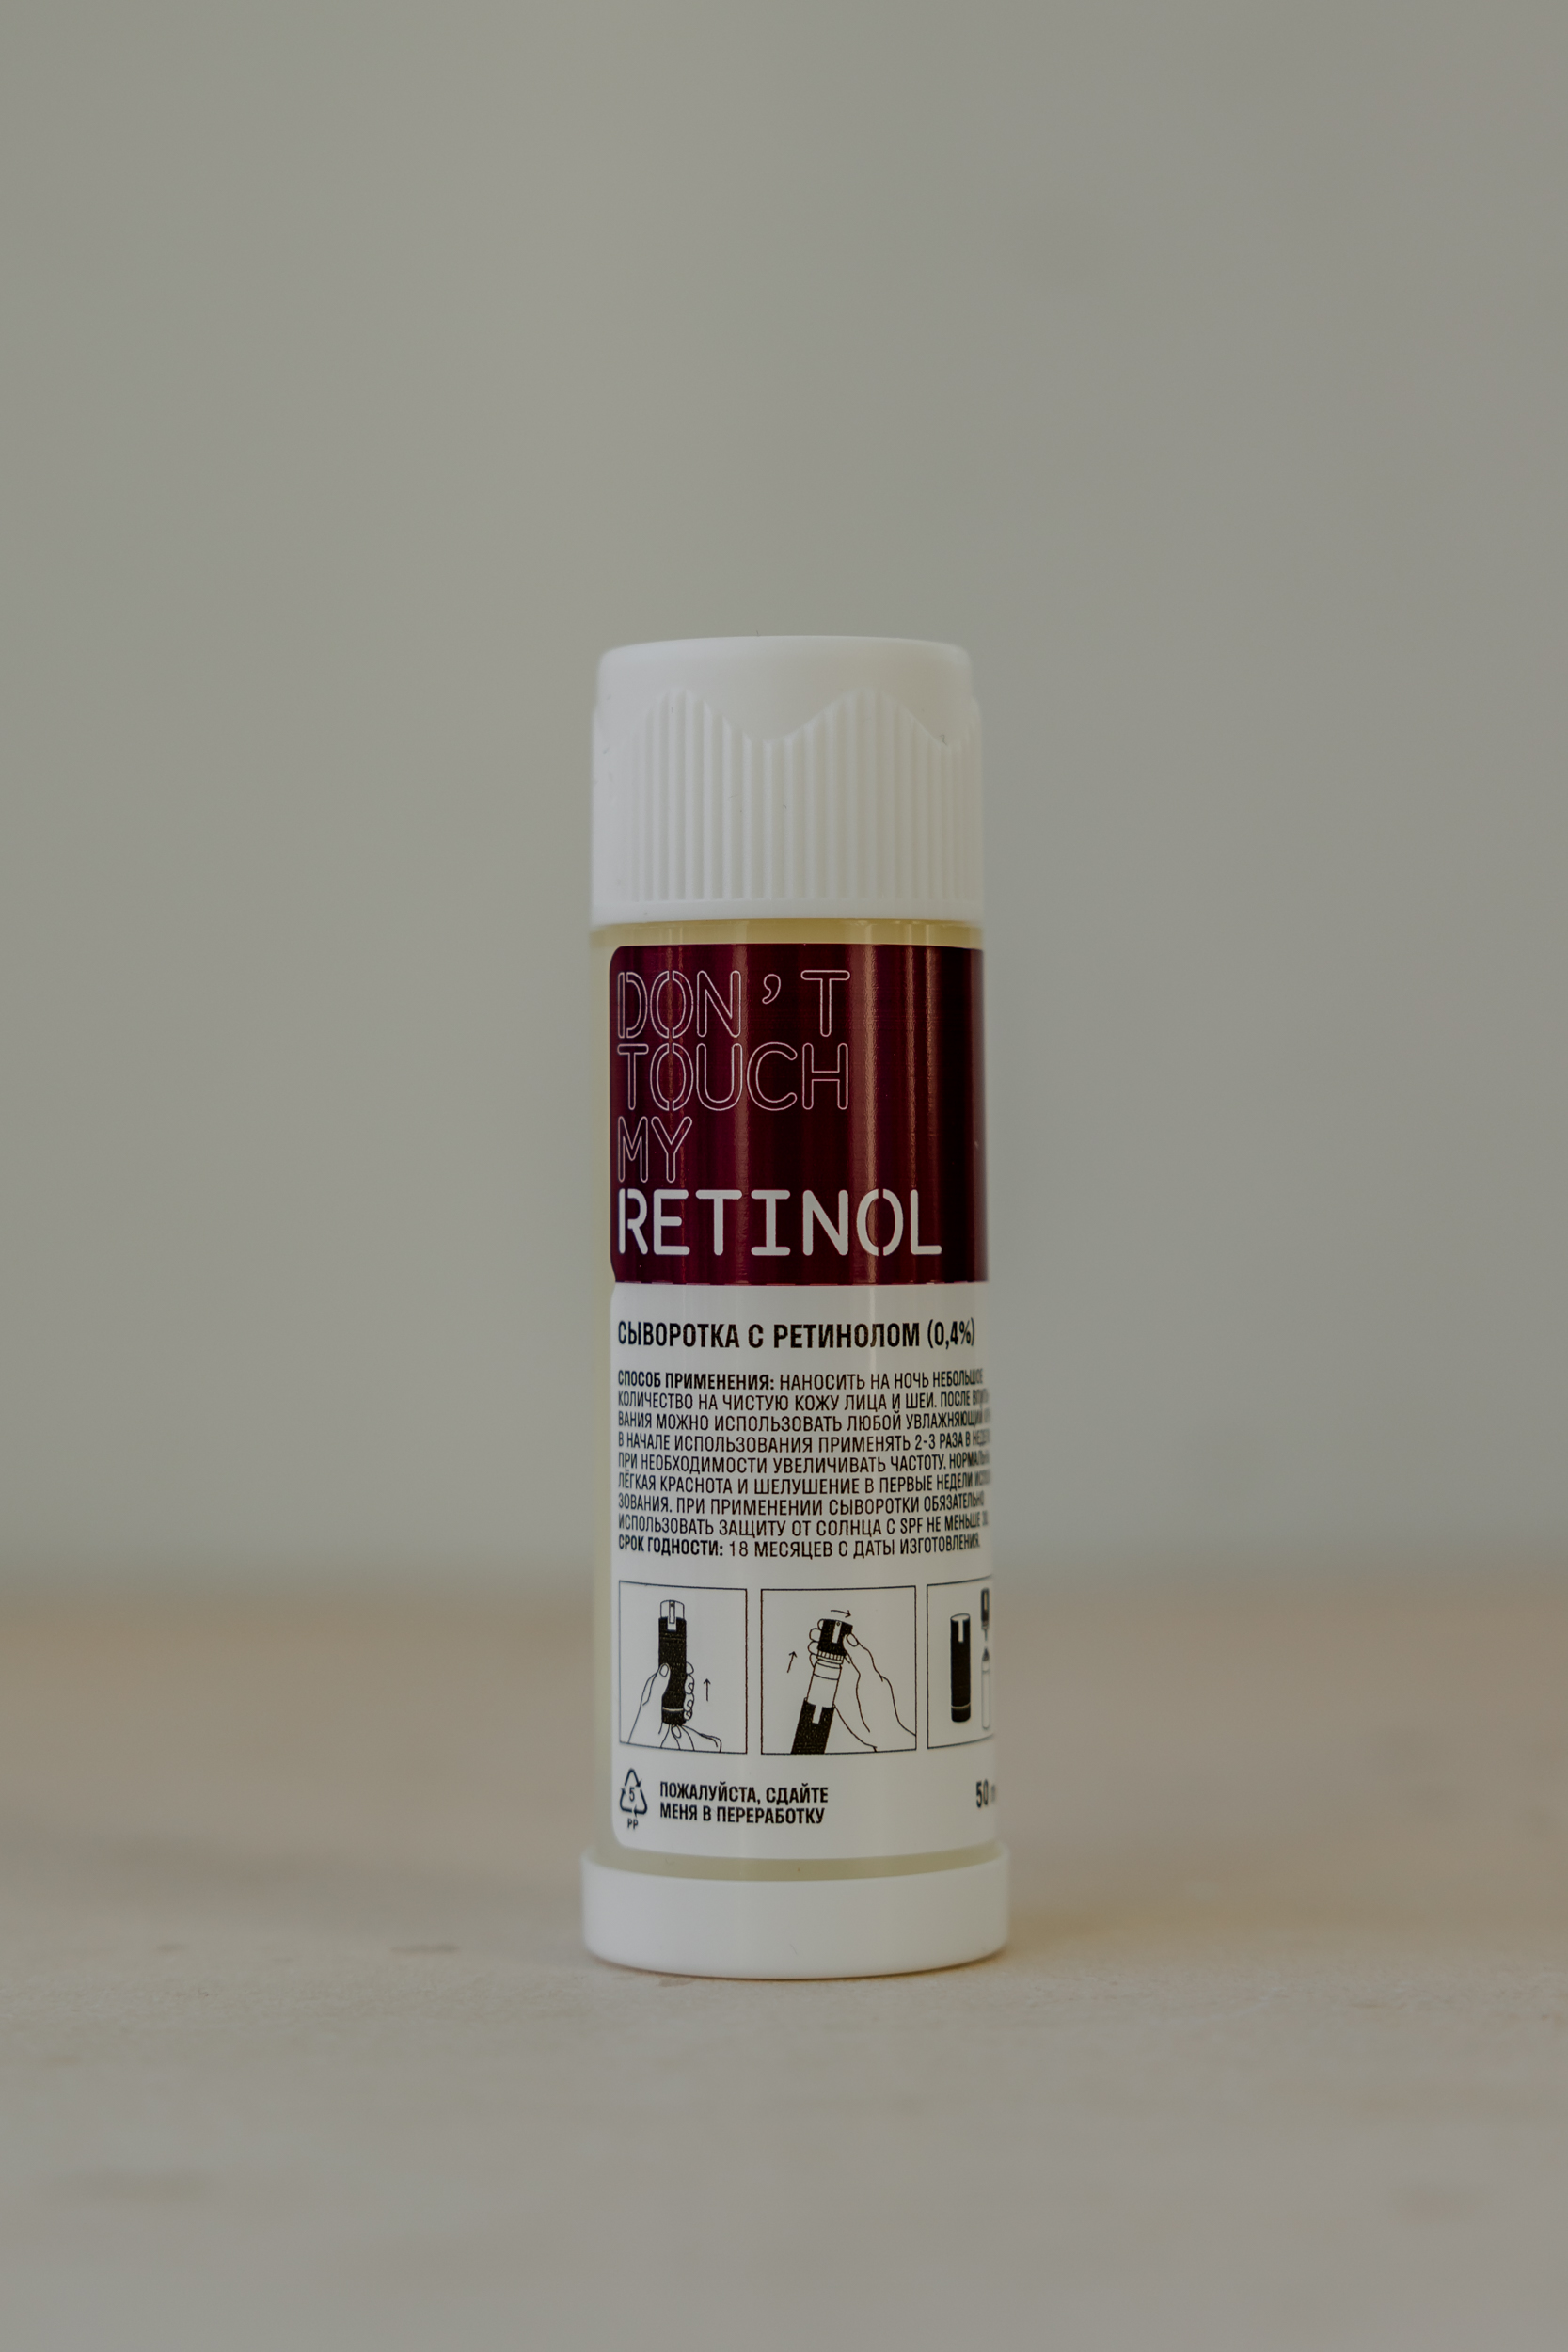 DONT TOUCH MY SKIN Retinol Сыворотка с ретинолом (0,4%) для кожи любого типа рефил 30 мл